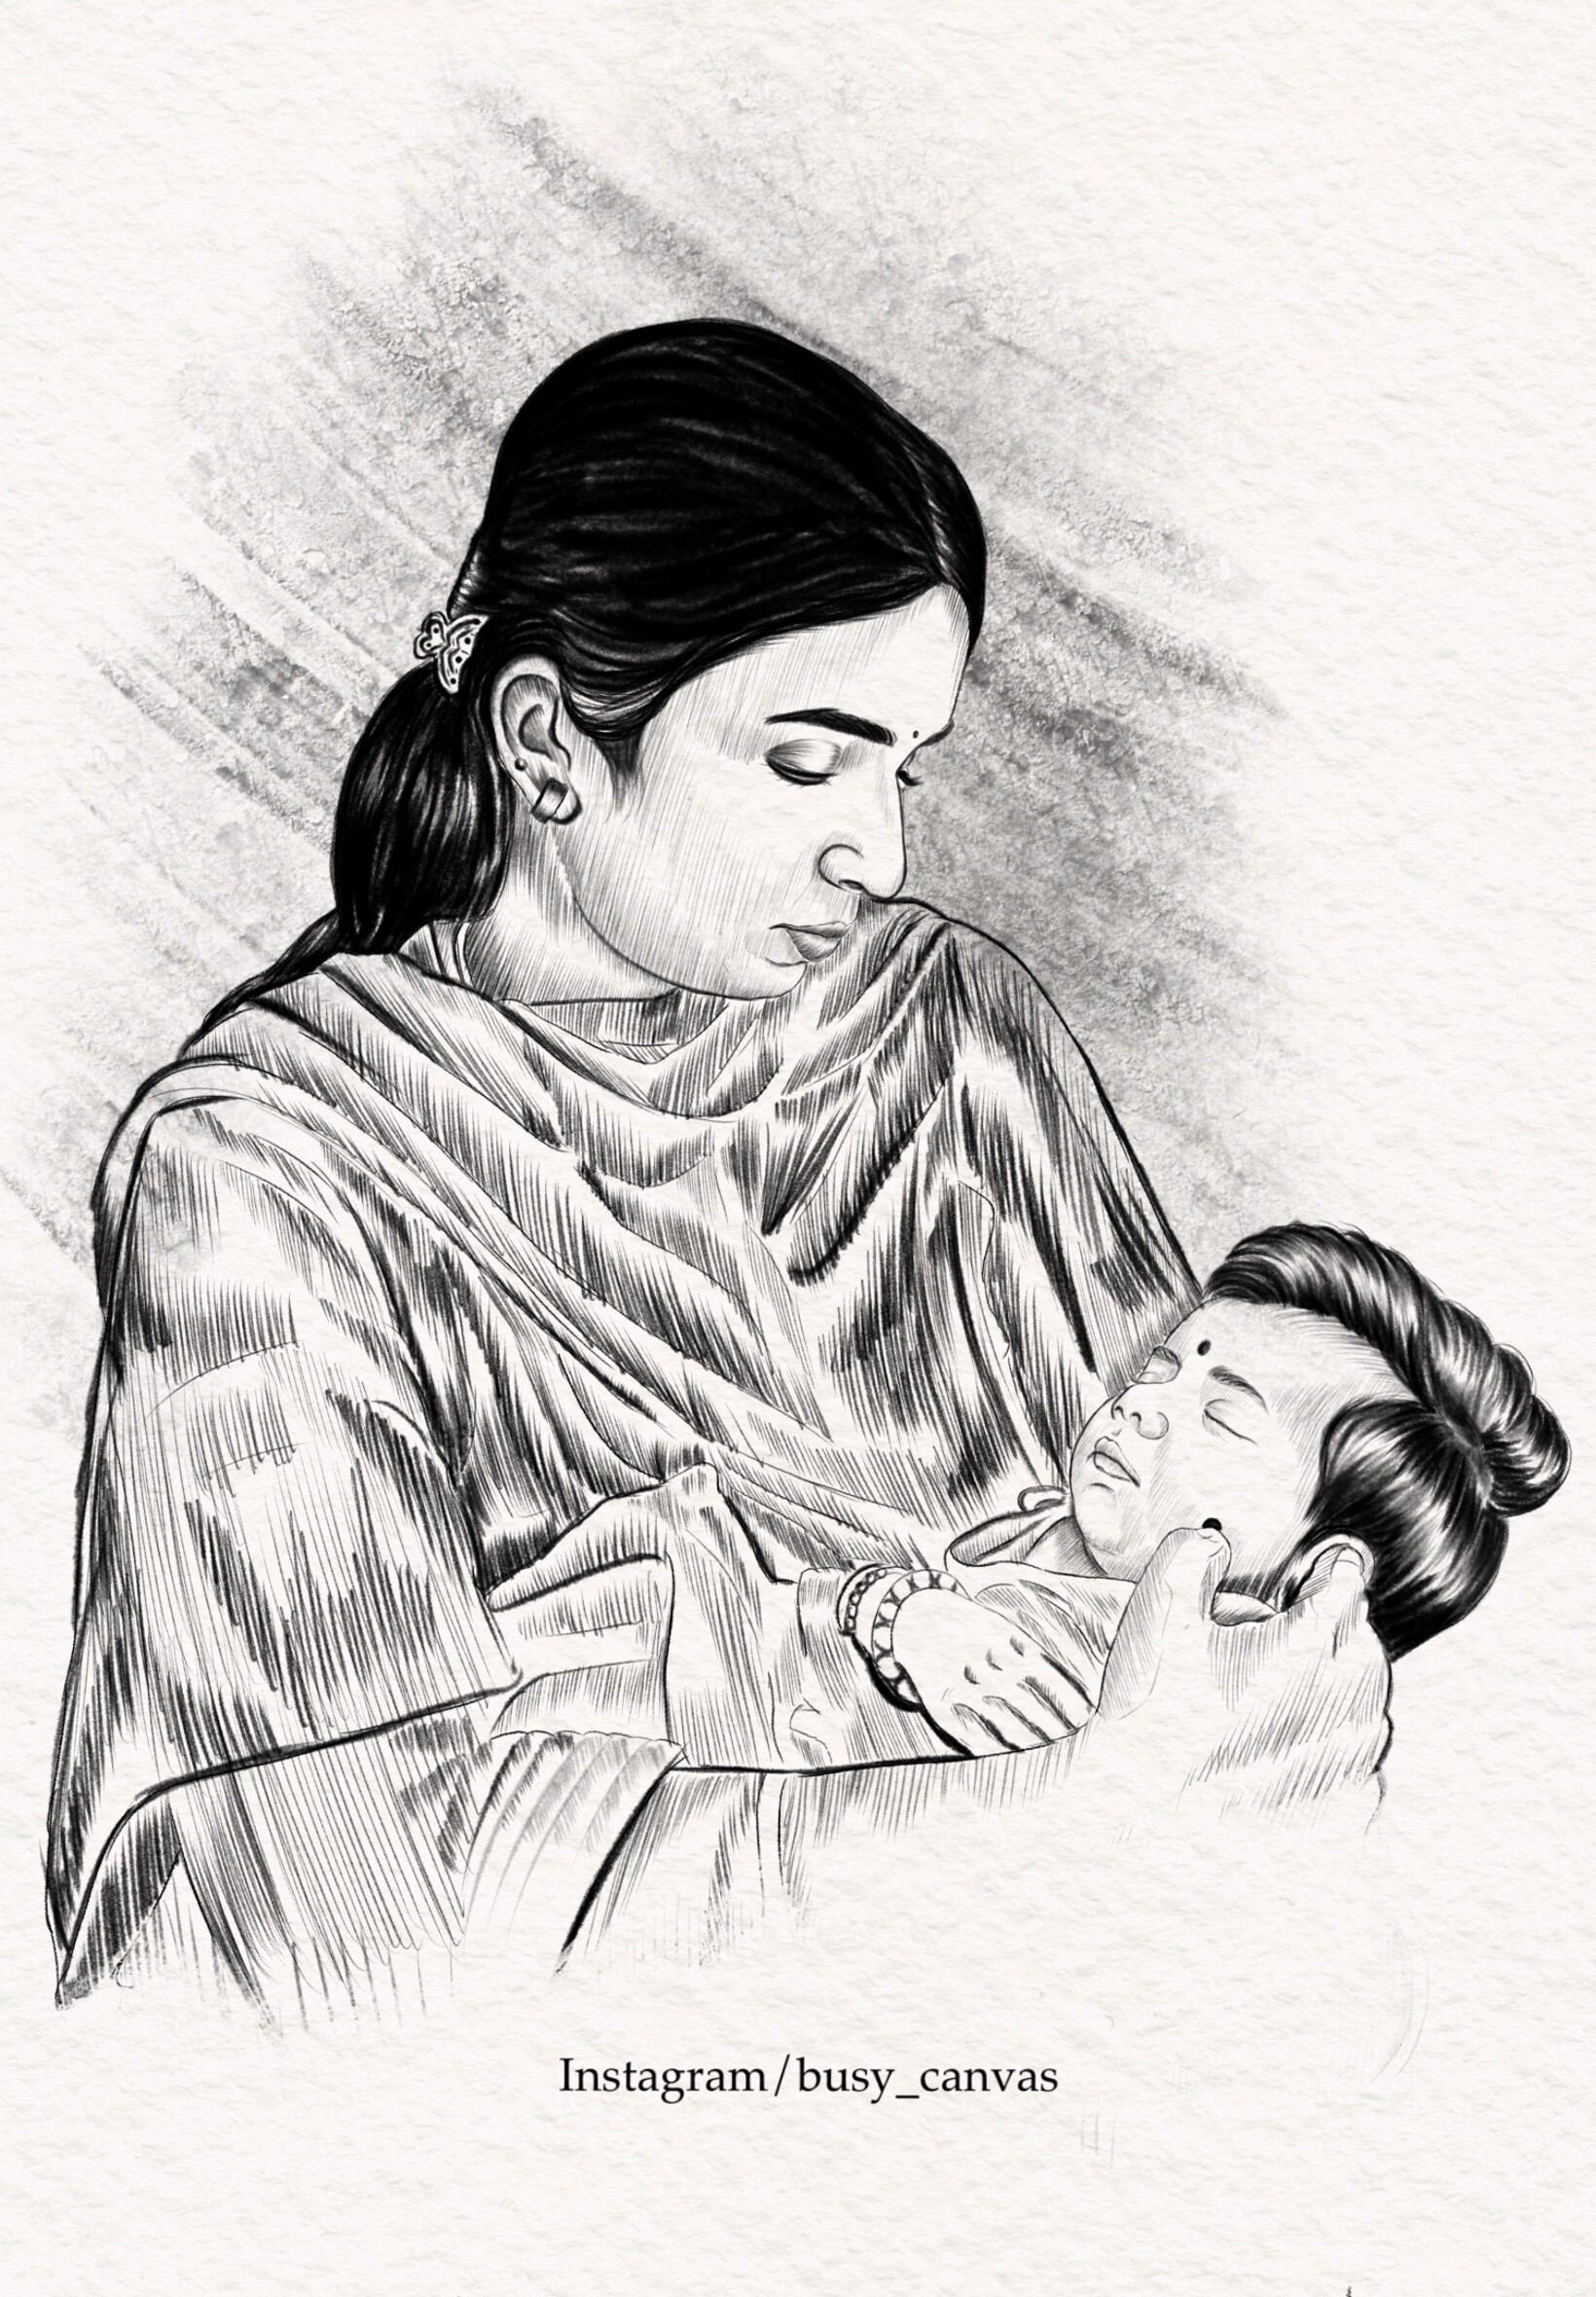 ArtStation - Pencil Sketch of a Mother